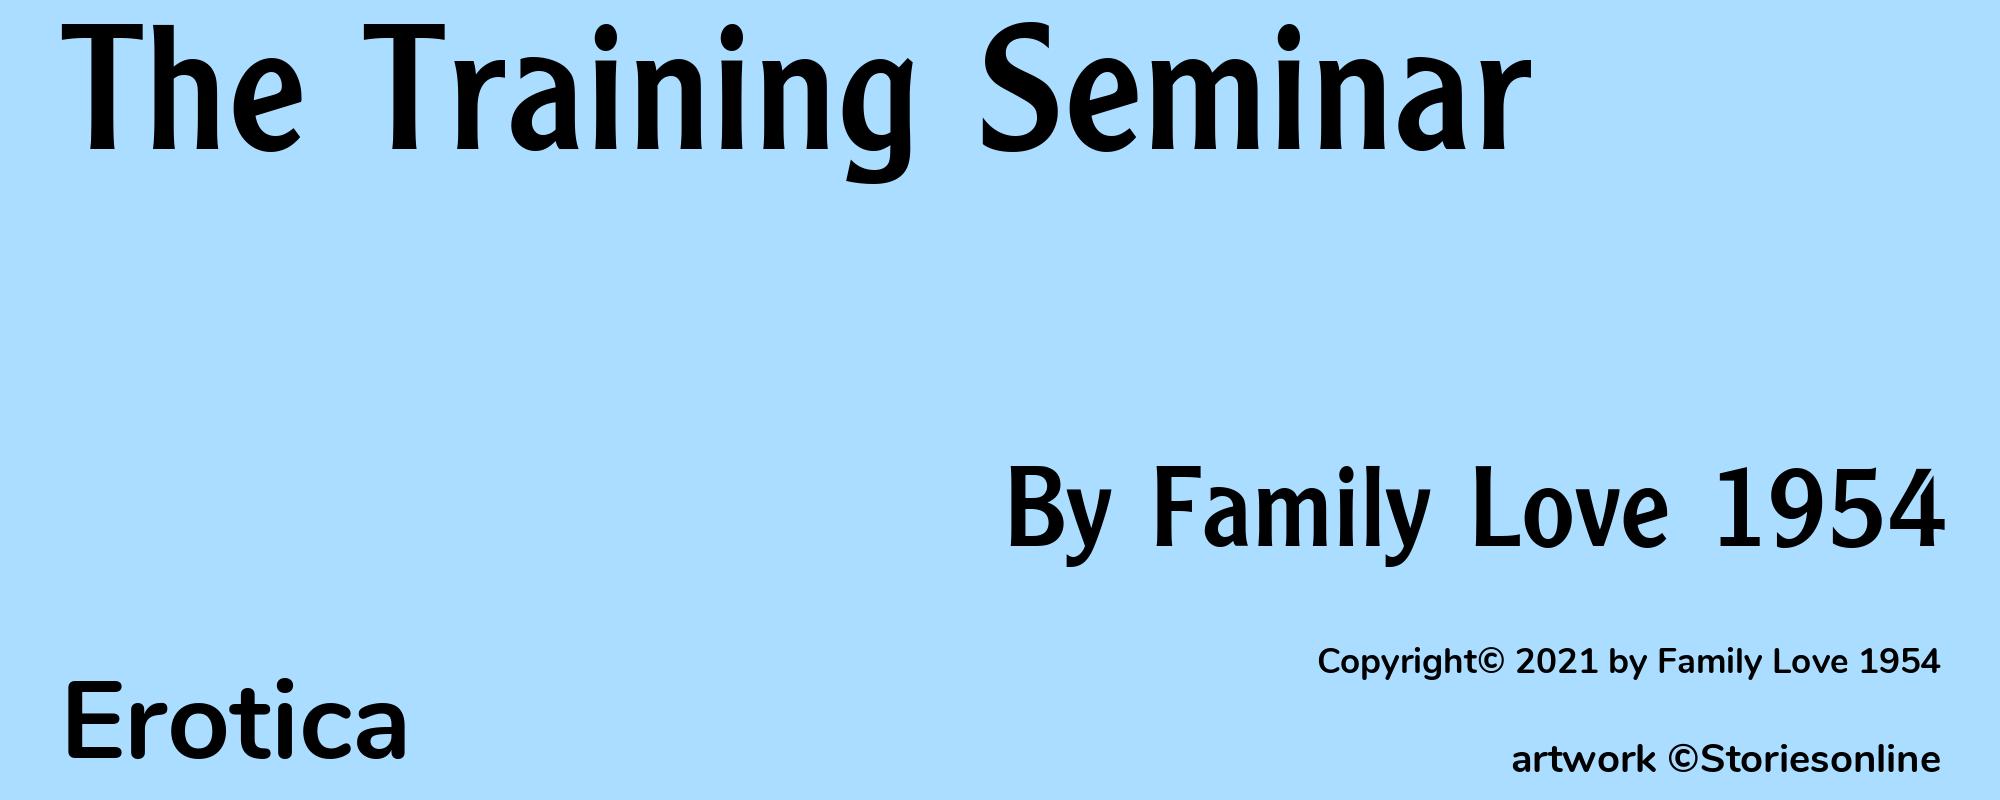 The Training Seminar - Cover